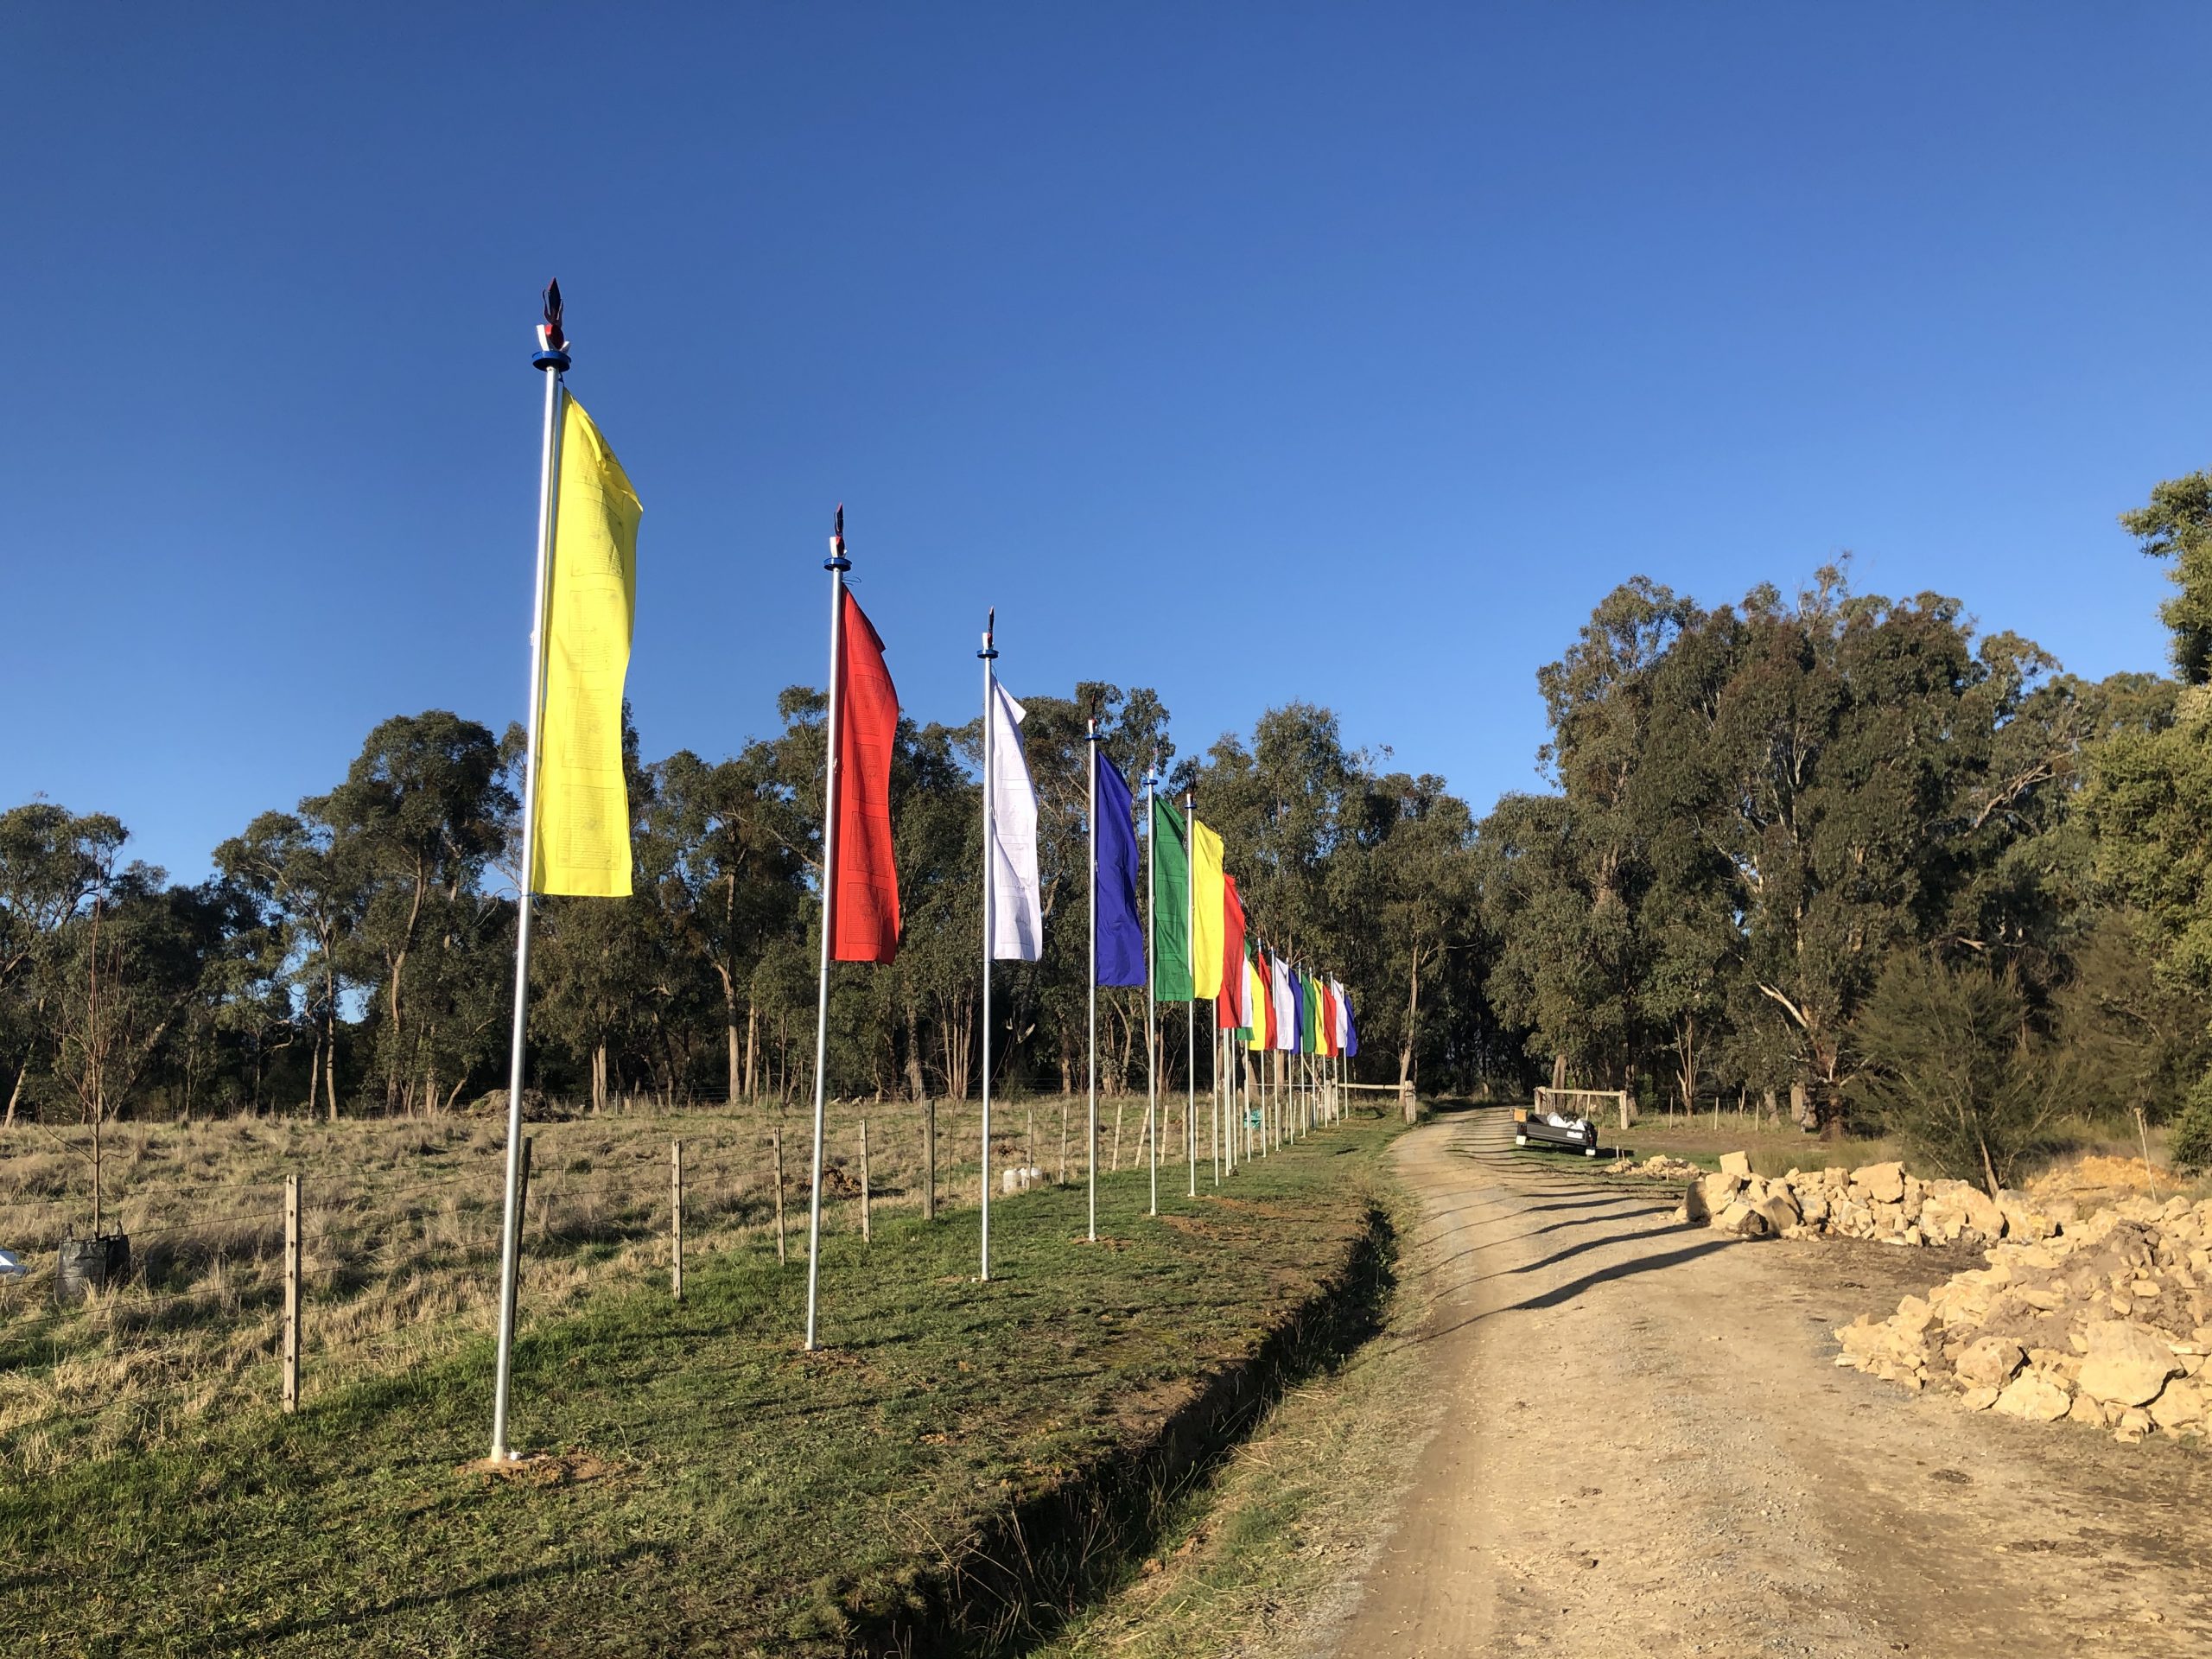 Prayer Flags Raised at Land of Shambhala